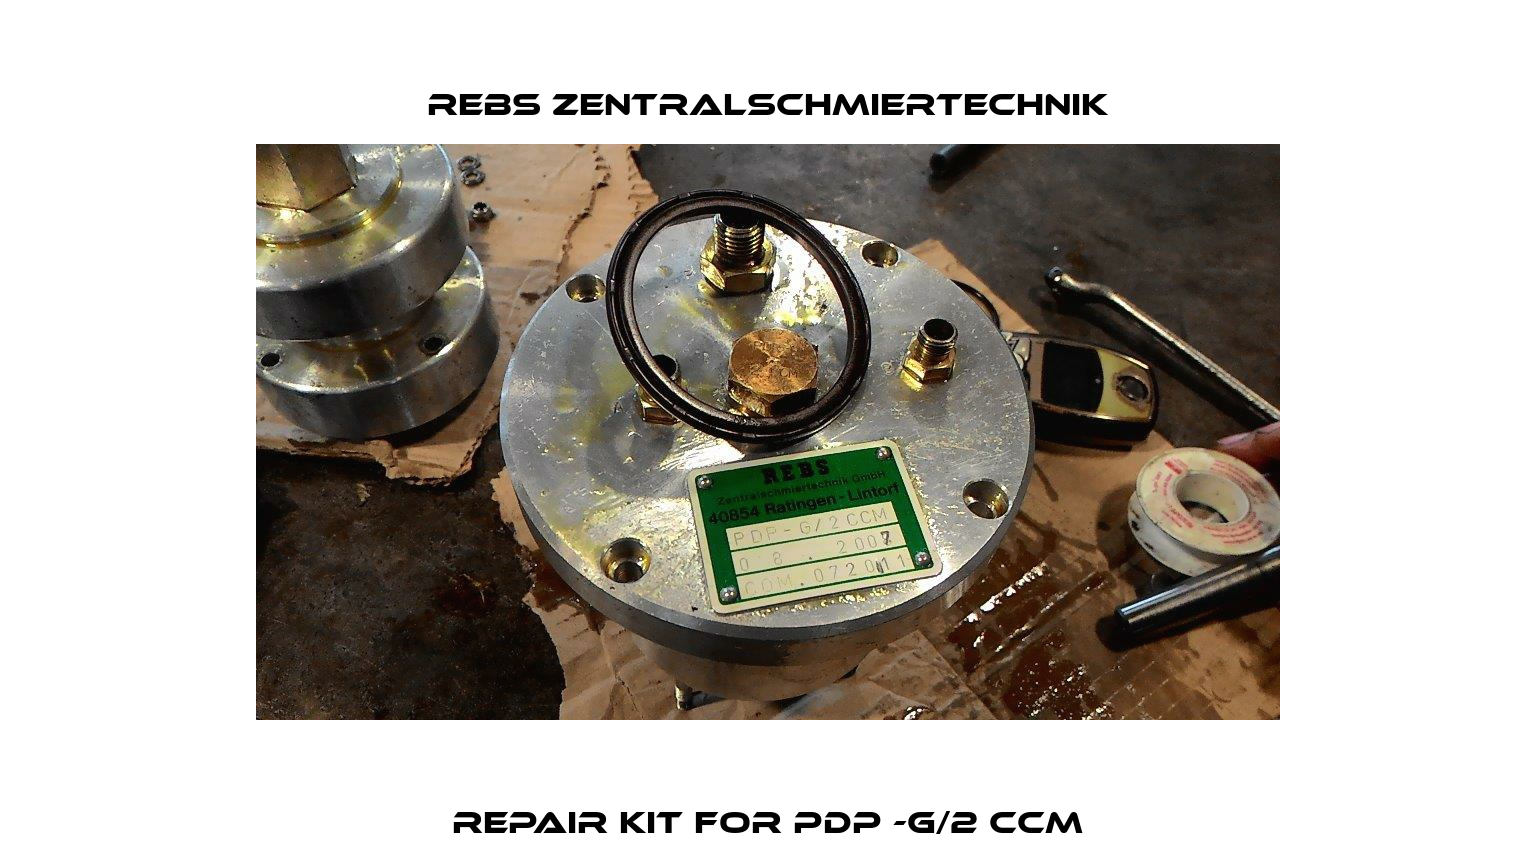 Repair kit for PDP -G/2 CCM Rebs Zentralschmiertechnik